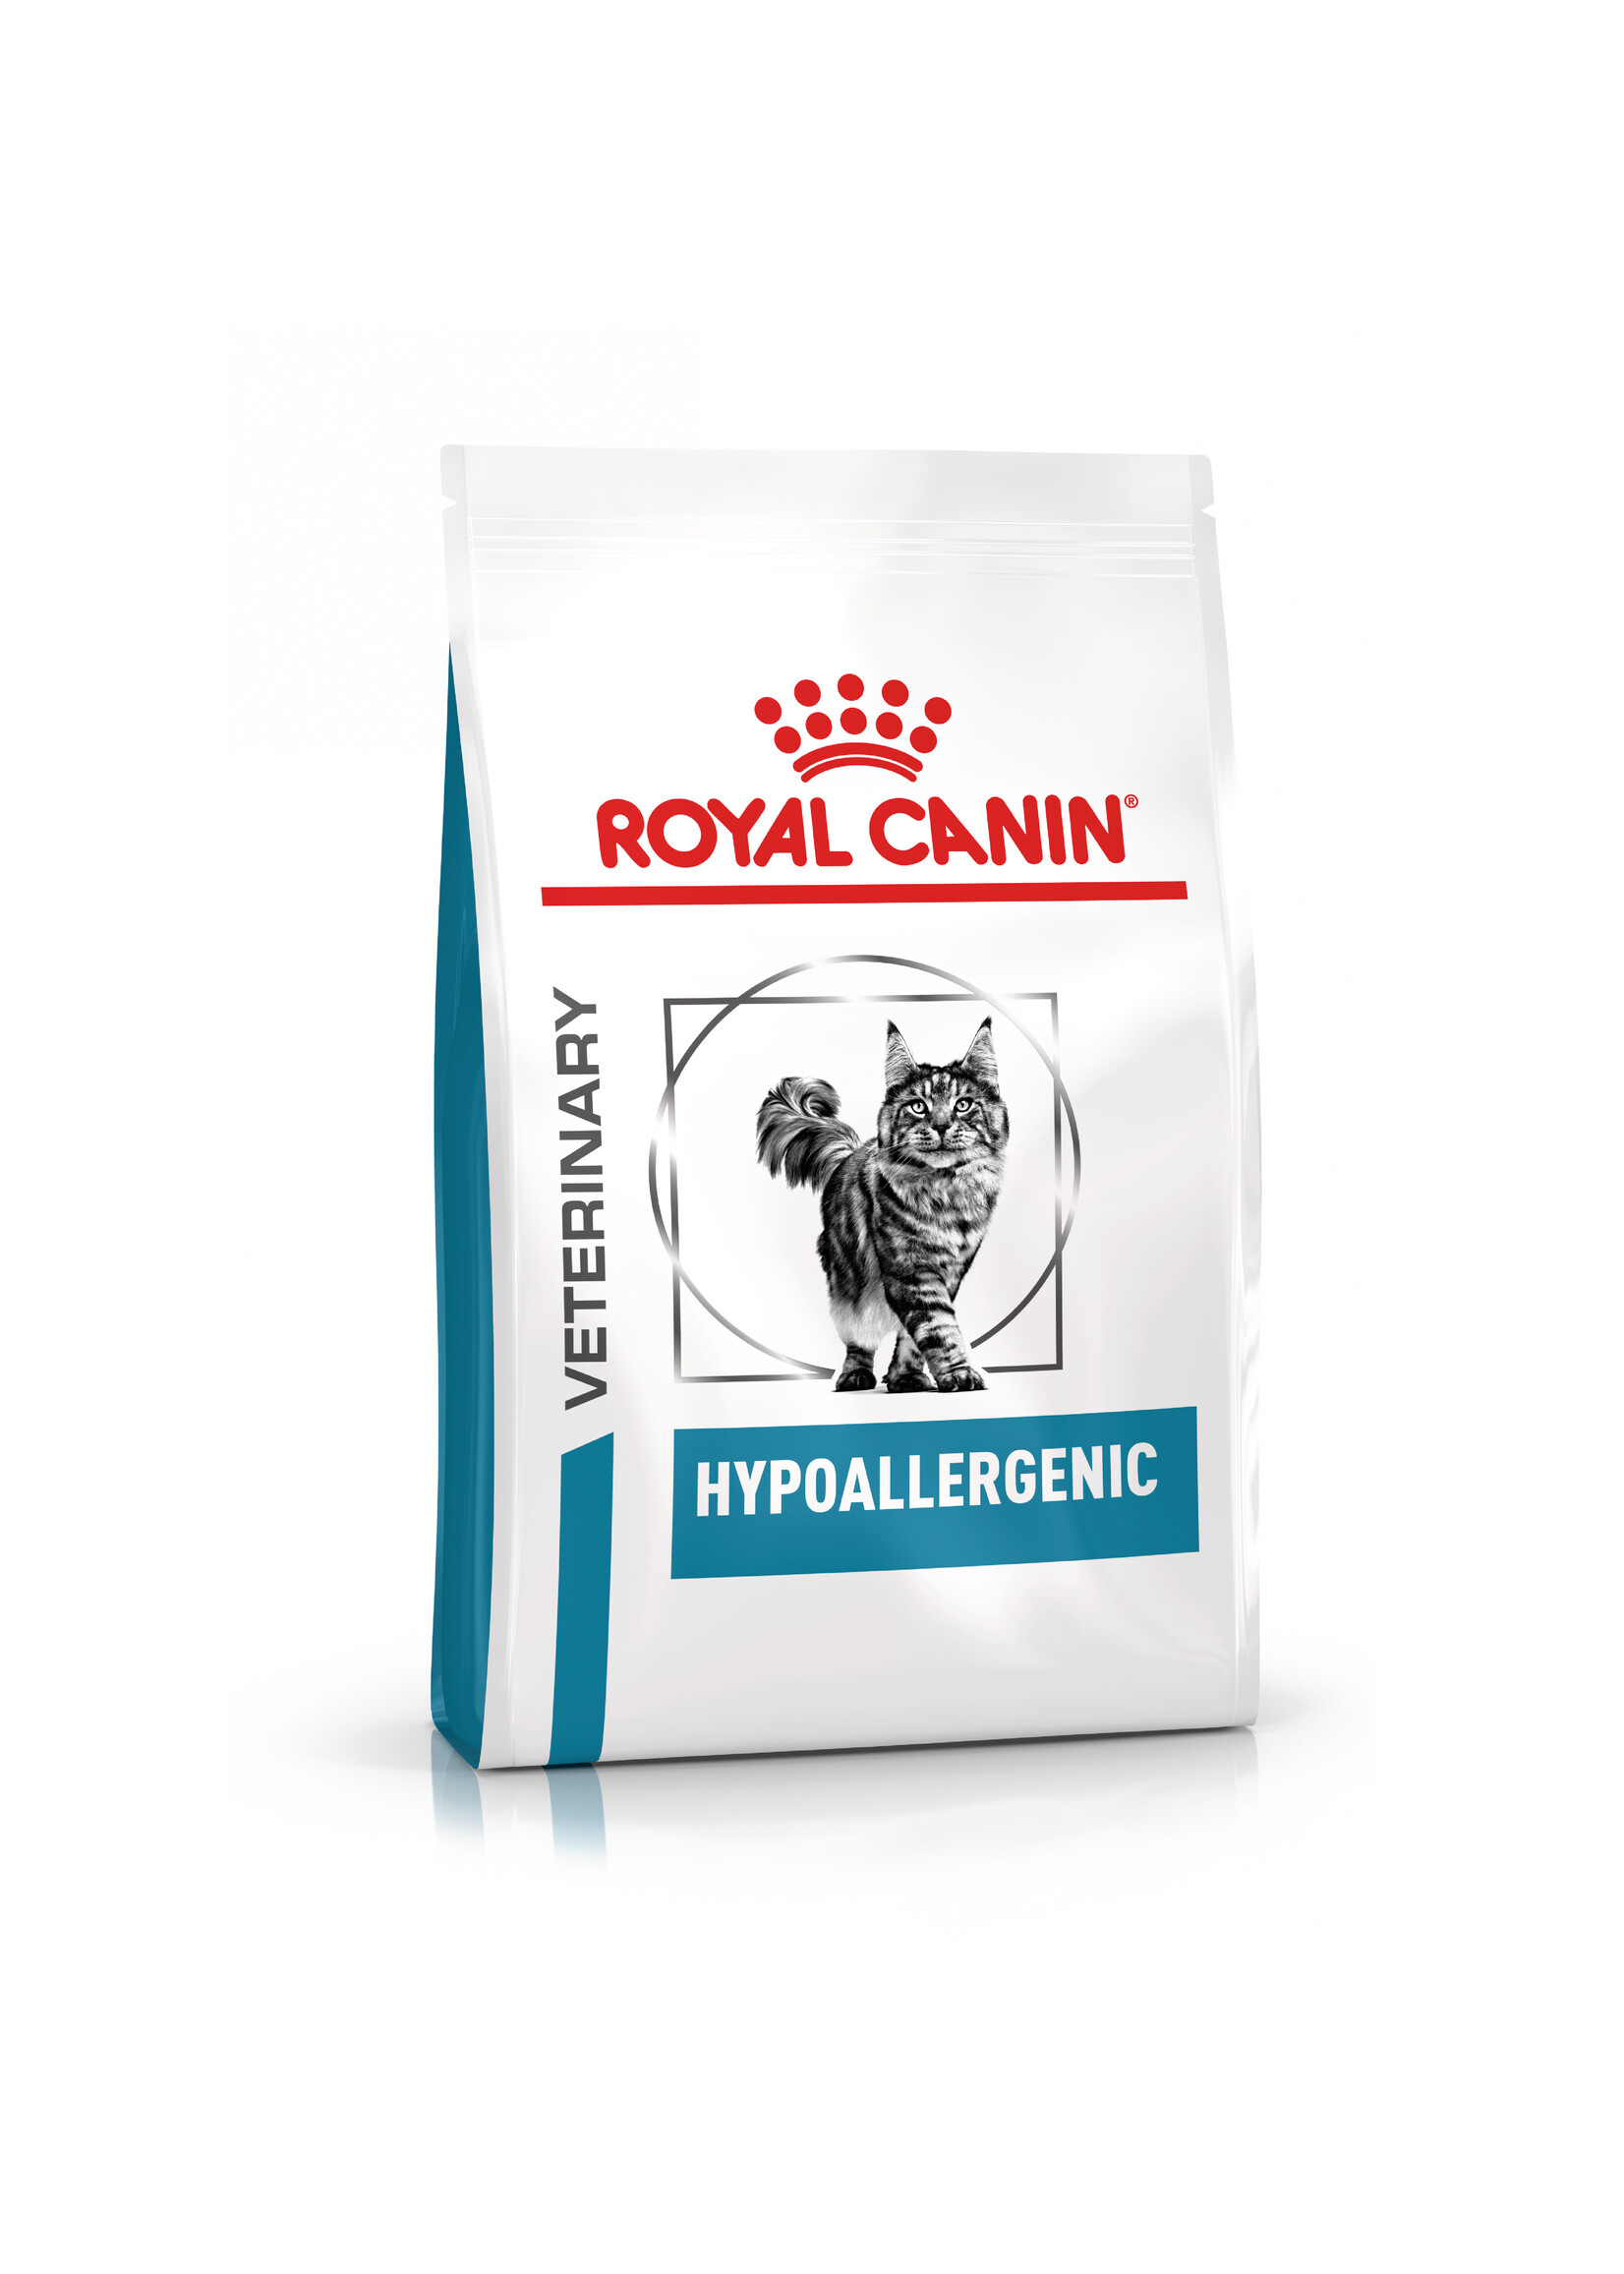 Royal Canin Royal Canin Hypoallergenic Katze